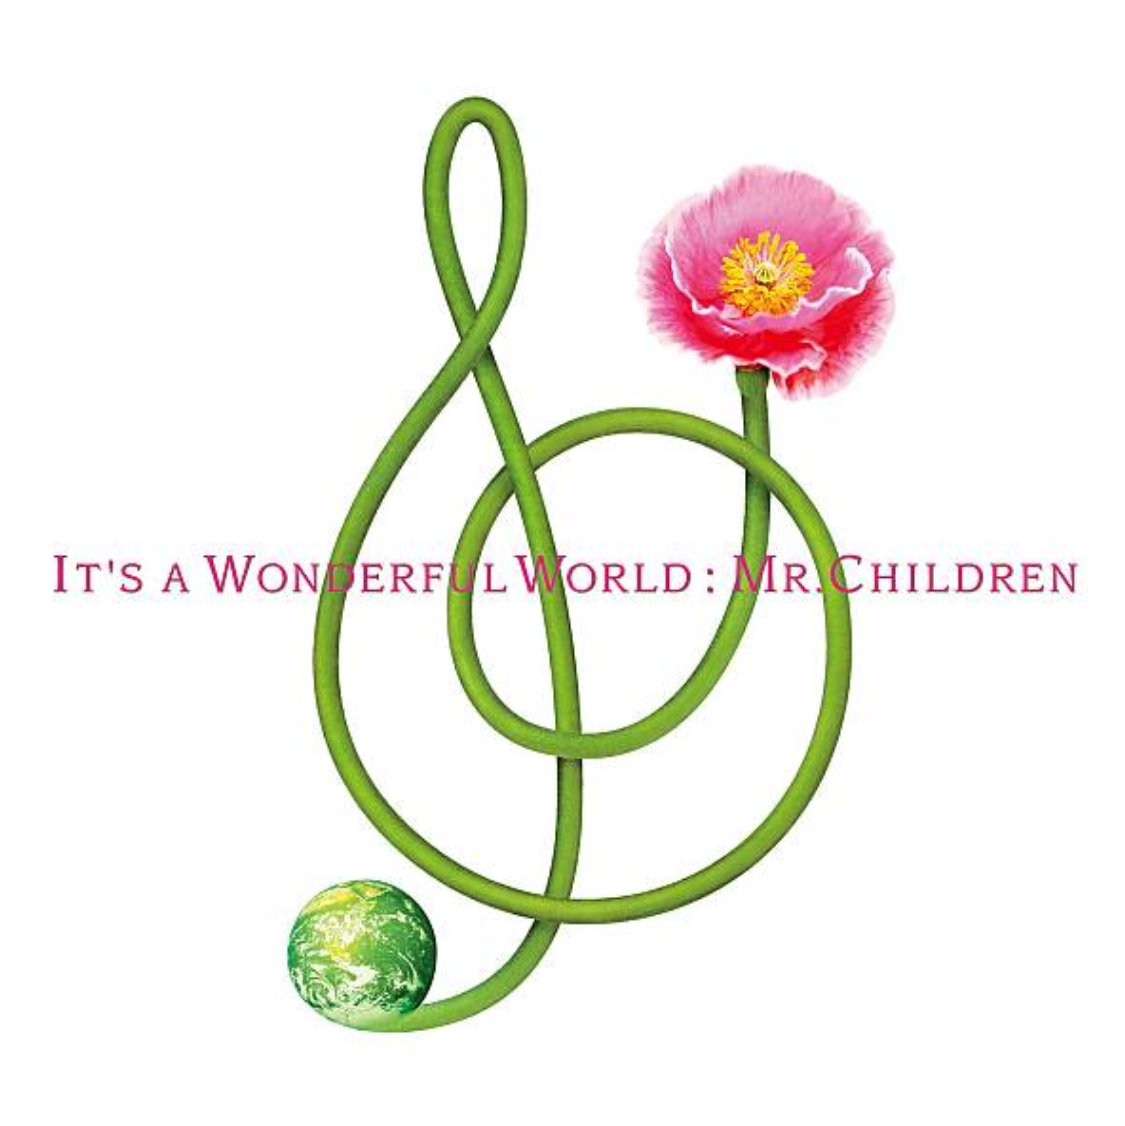 「It's a wonderful world」
    Mr.Children
  2002年5月10日発売

＃蘇生
そう何度でも 何度でも
僕は生まれ変わって行ける
そしていつか捨ててきた夢の続きを
暗闇から僕を呼ぶ
明日の声に耳を澄ませる
今も心に虹があるんだ

そうだ まだやりかけの未来がある

＃MrꓸChildren